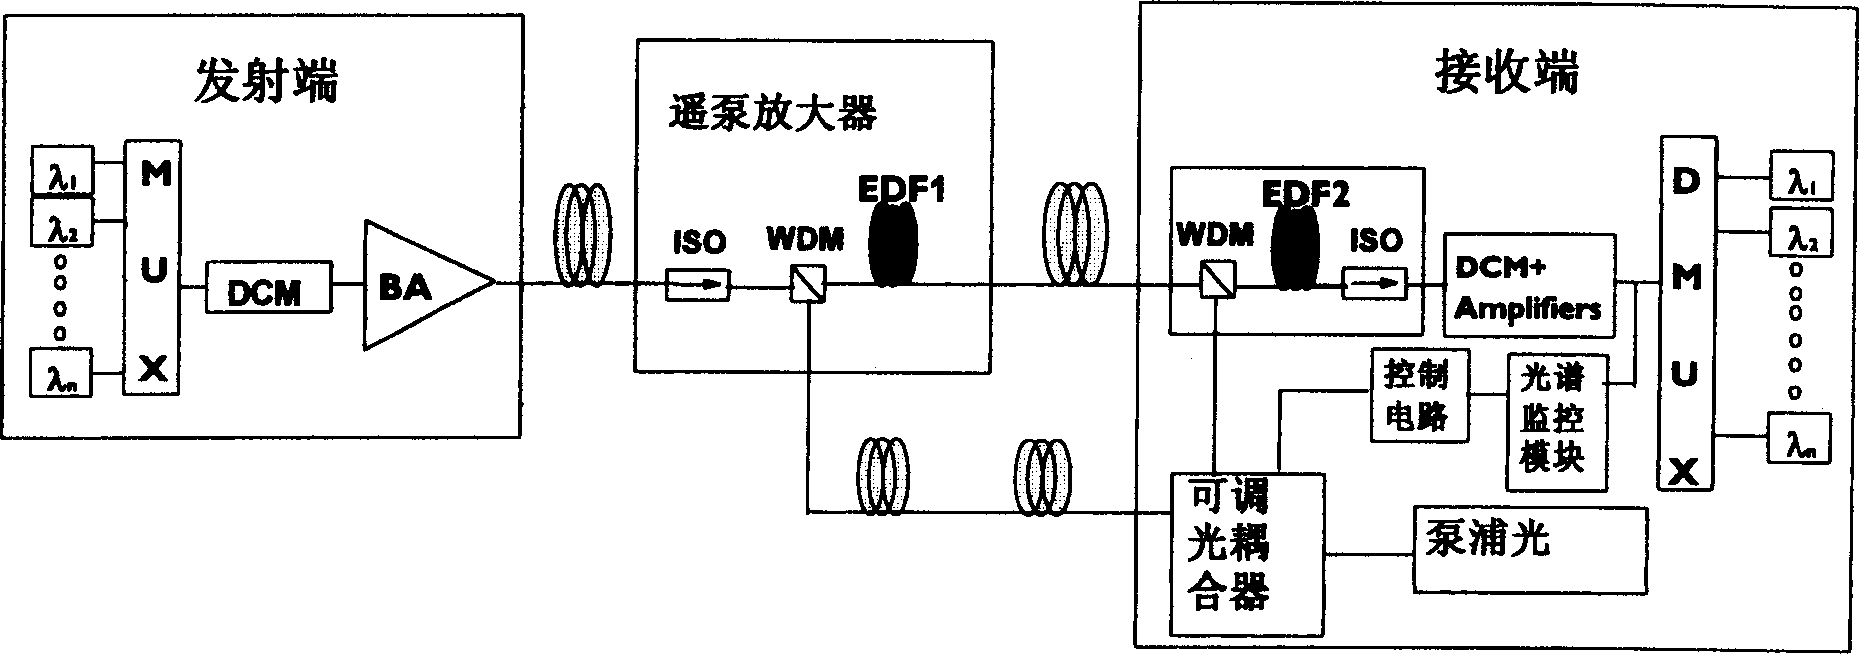 A remote pump transmission system